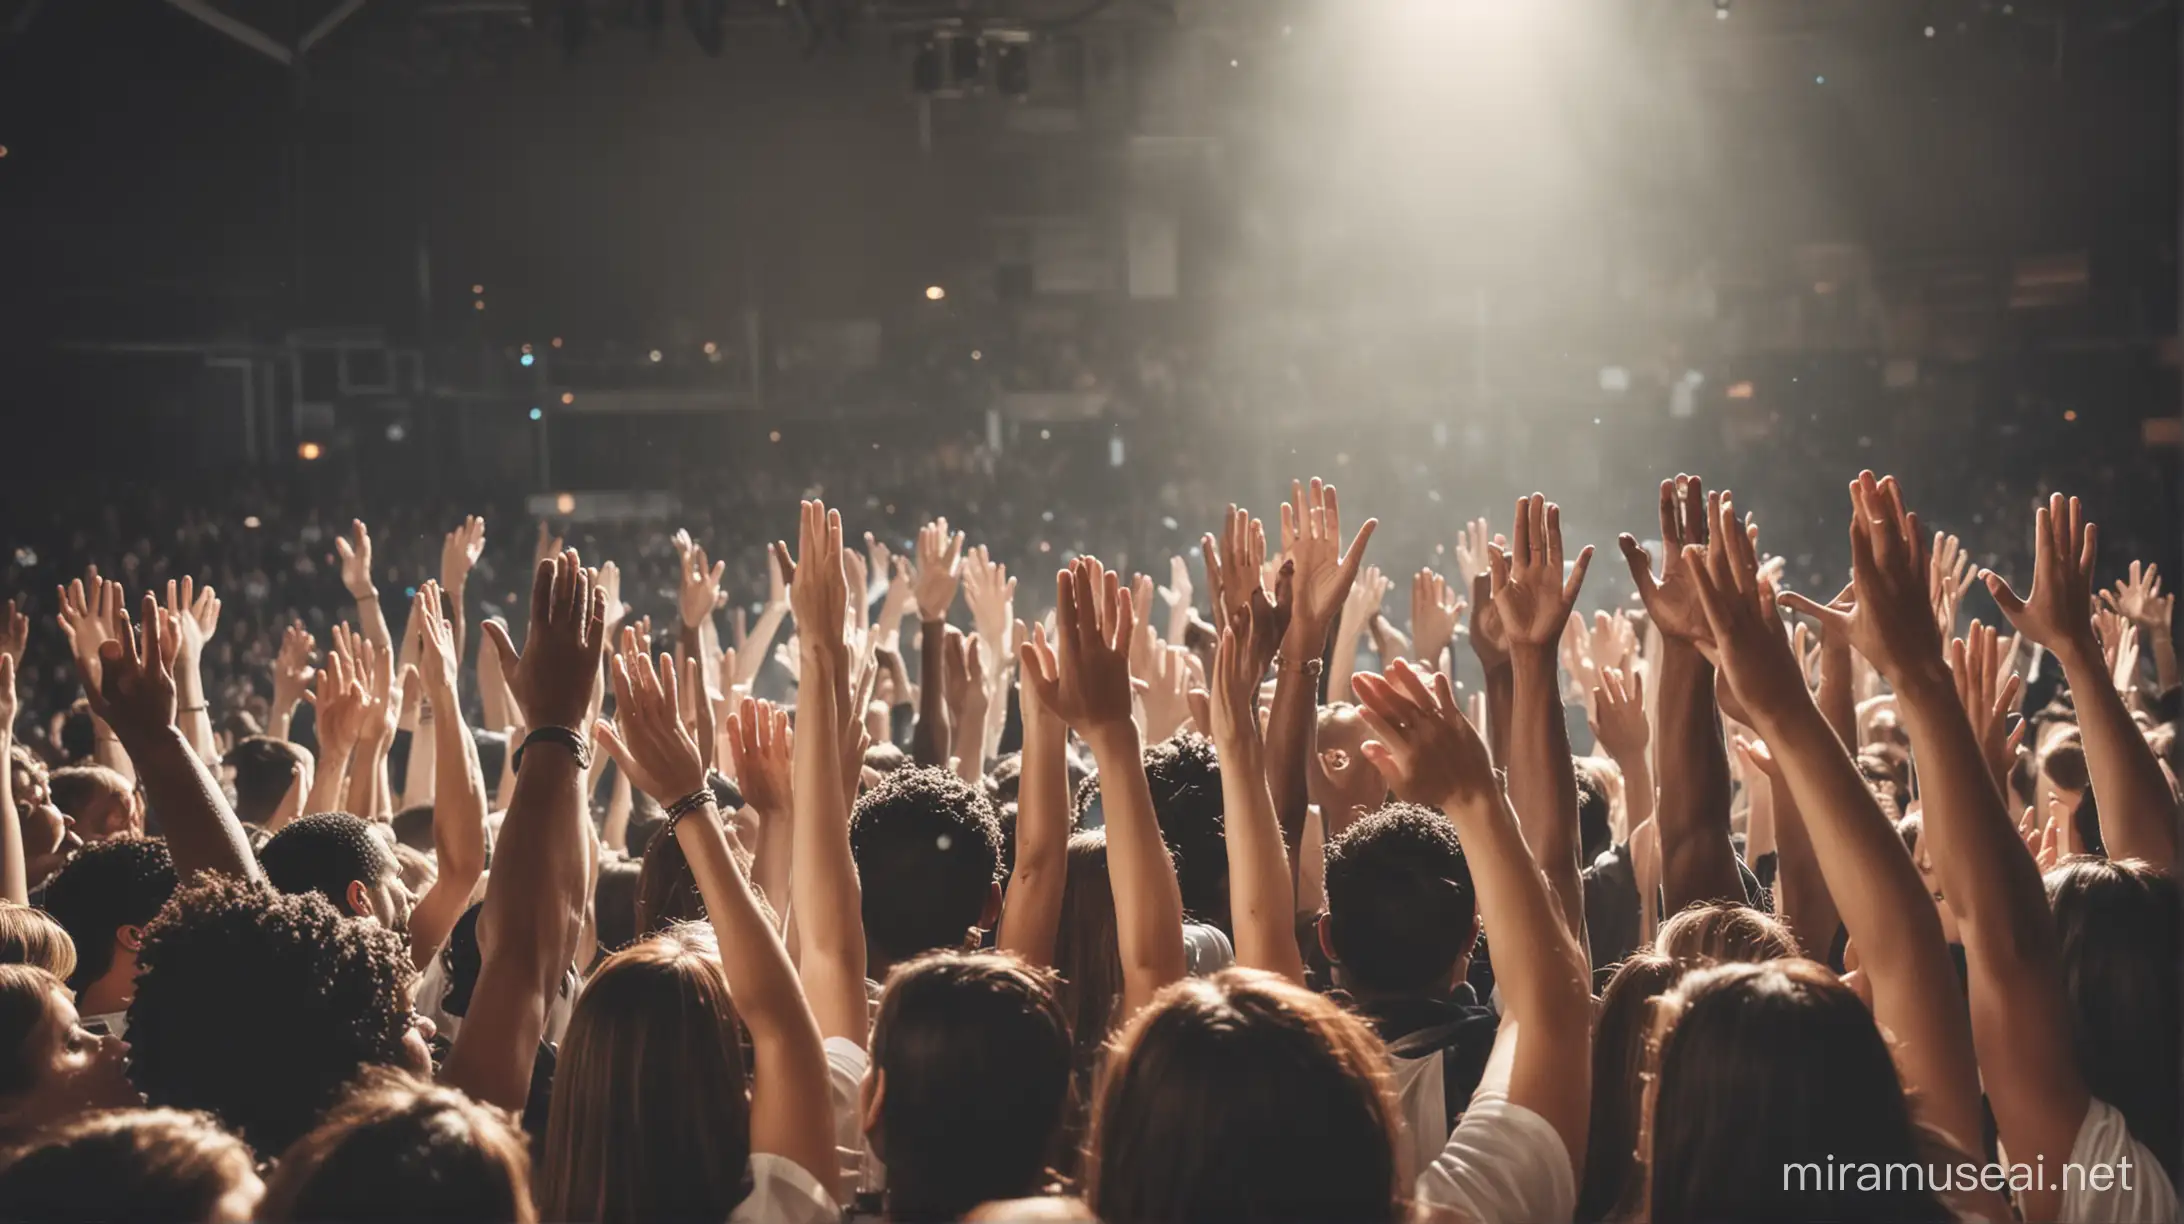  christian worship gathering raising hands
